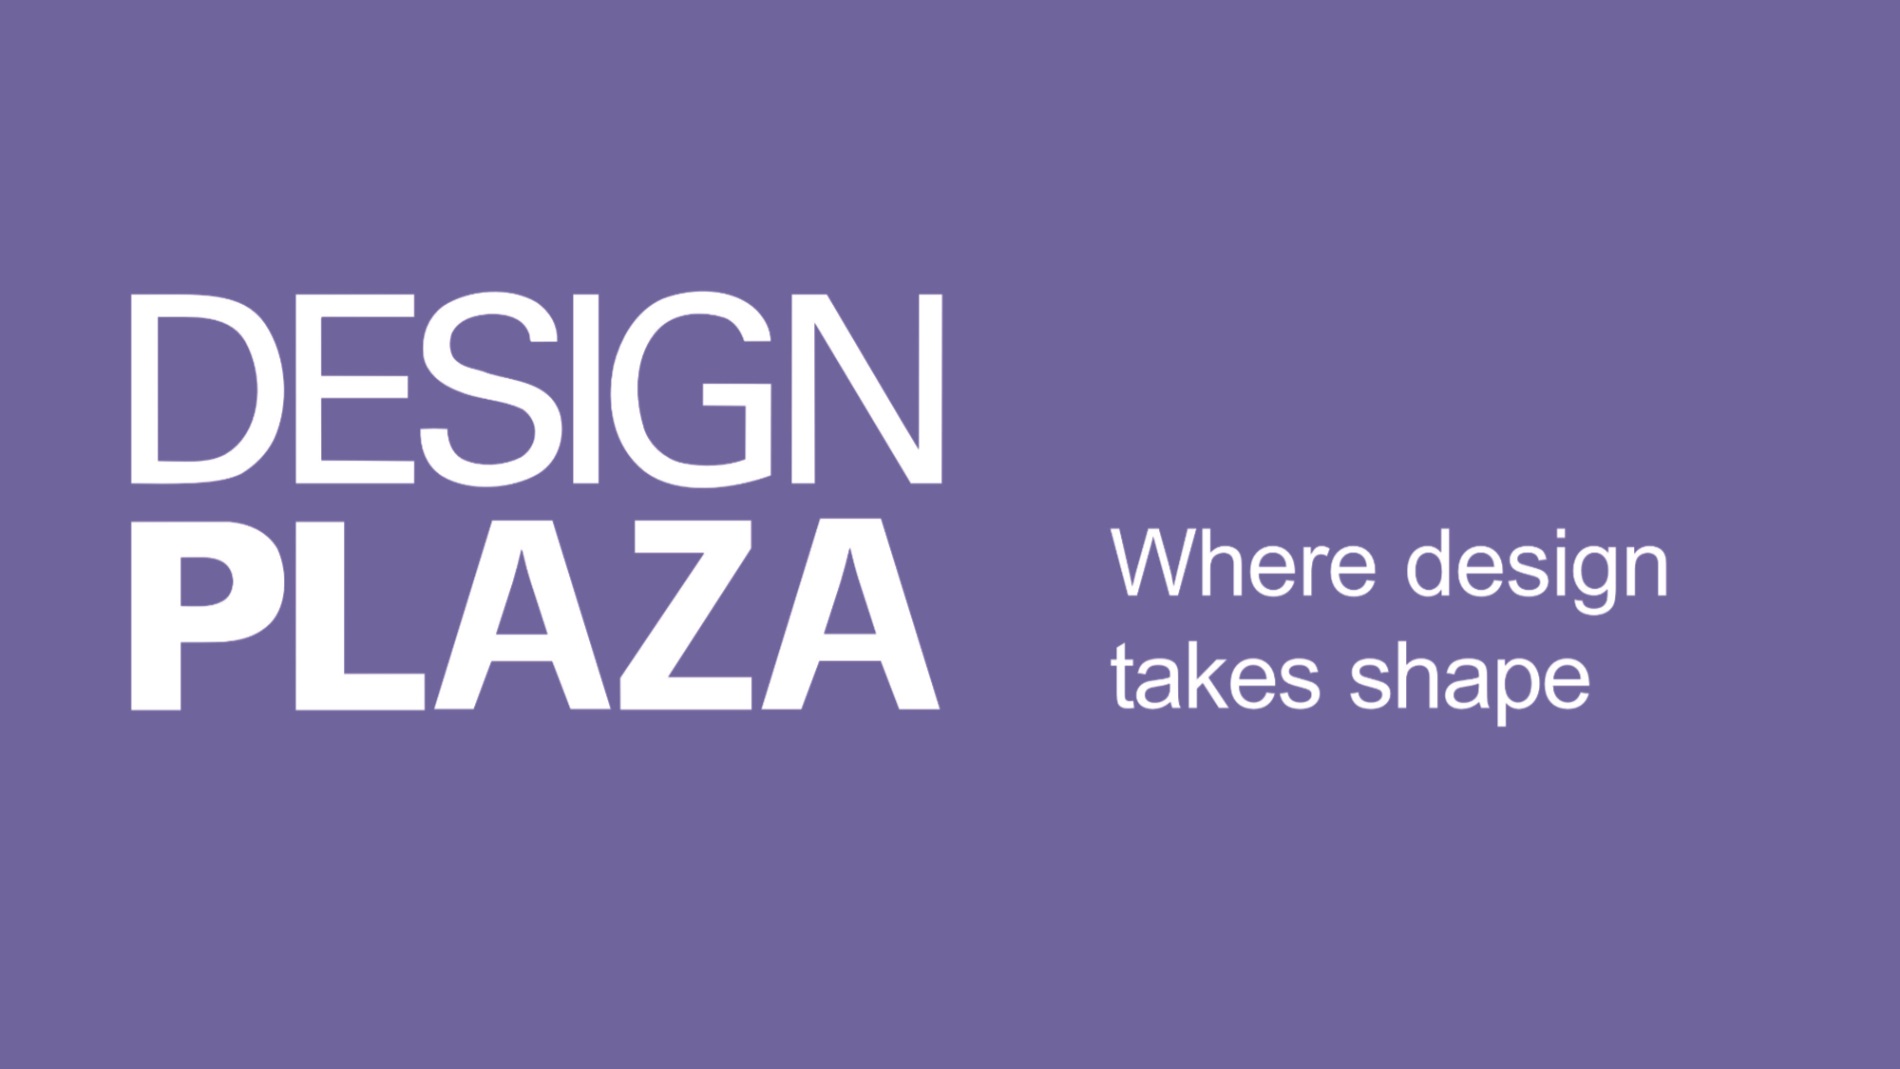 Logo Design Plaza